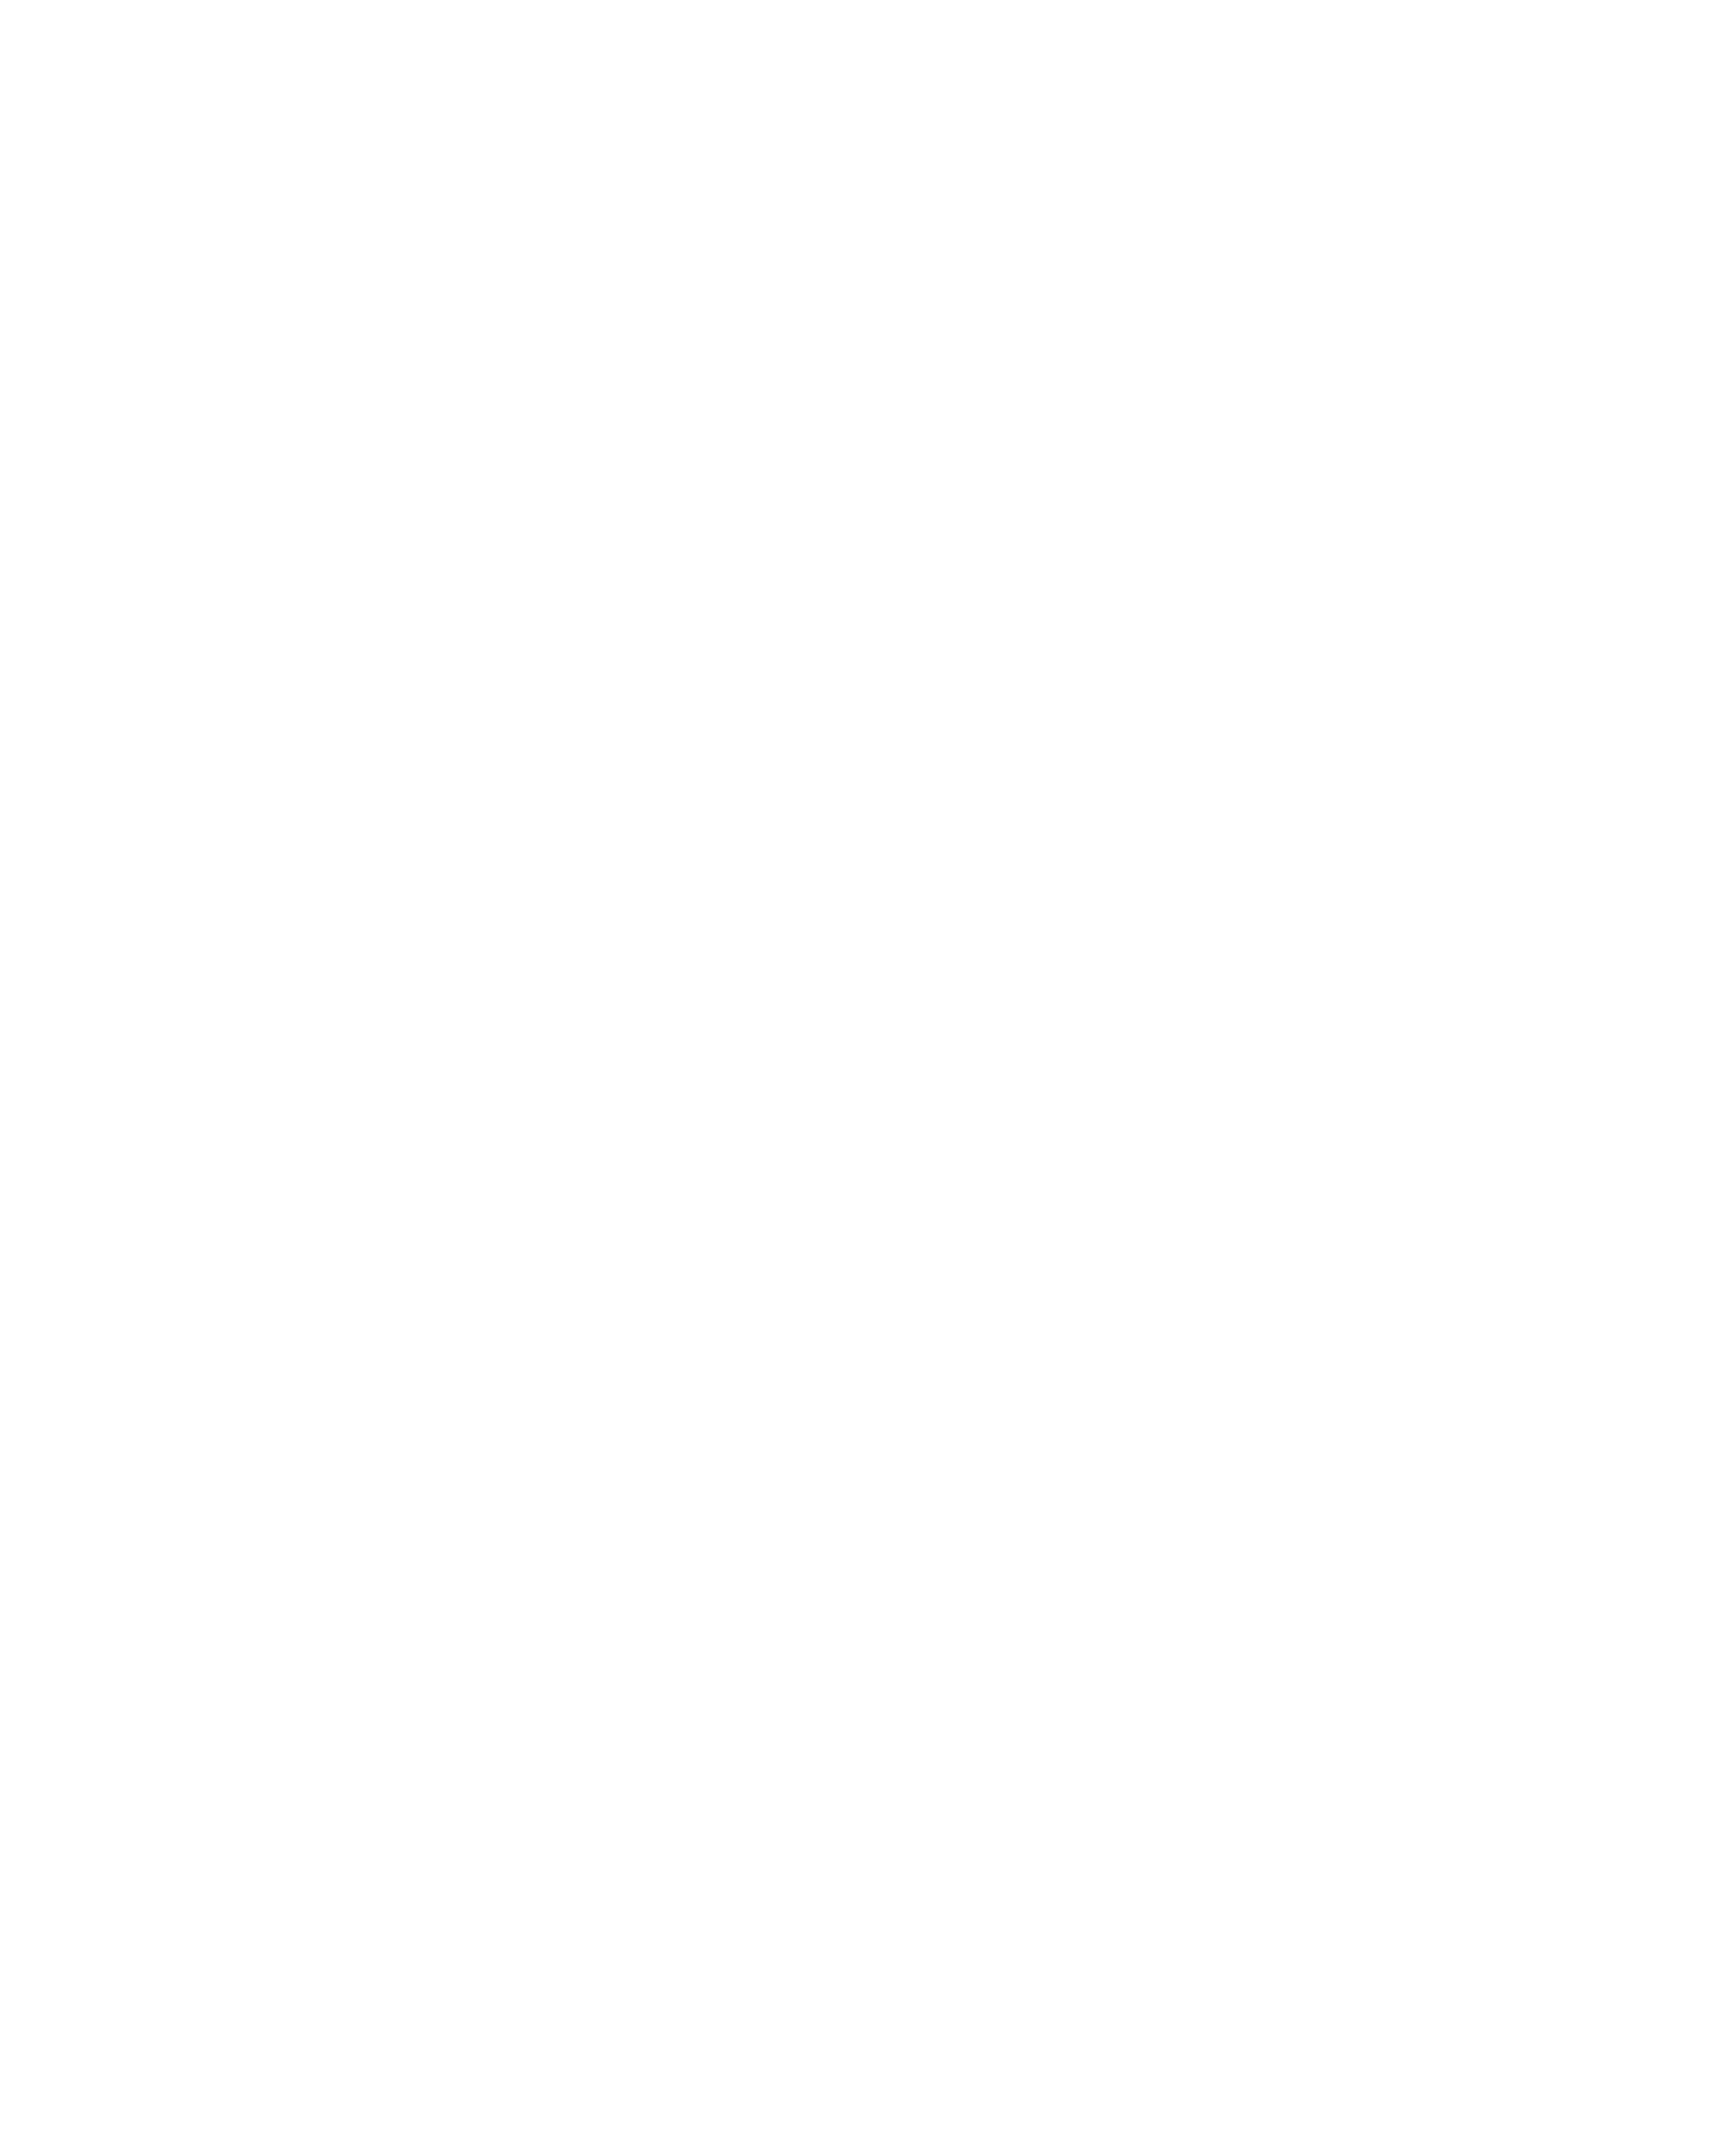 CARLOS COMMUNICATION